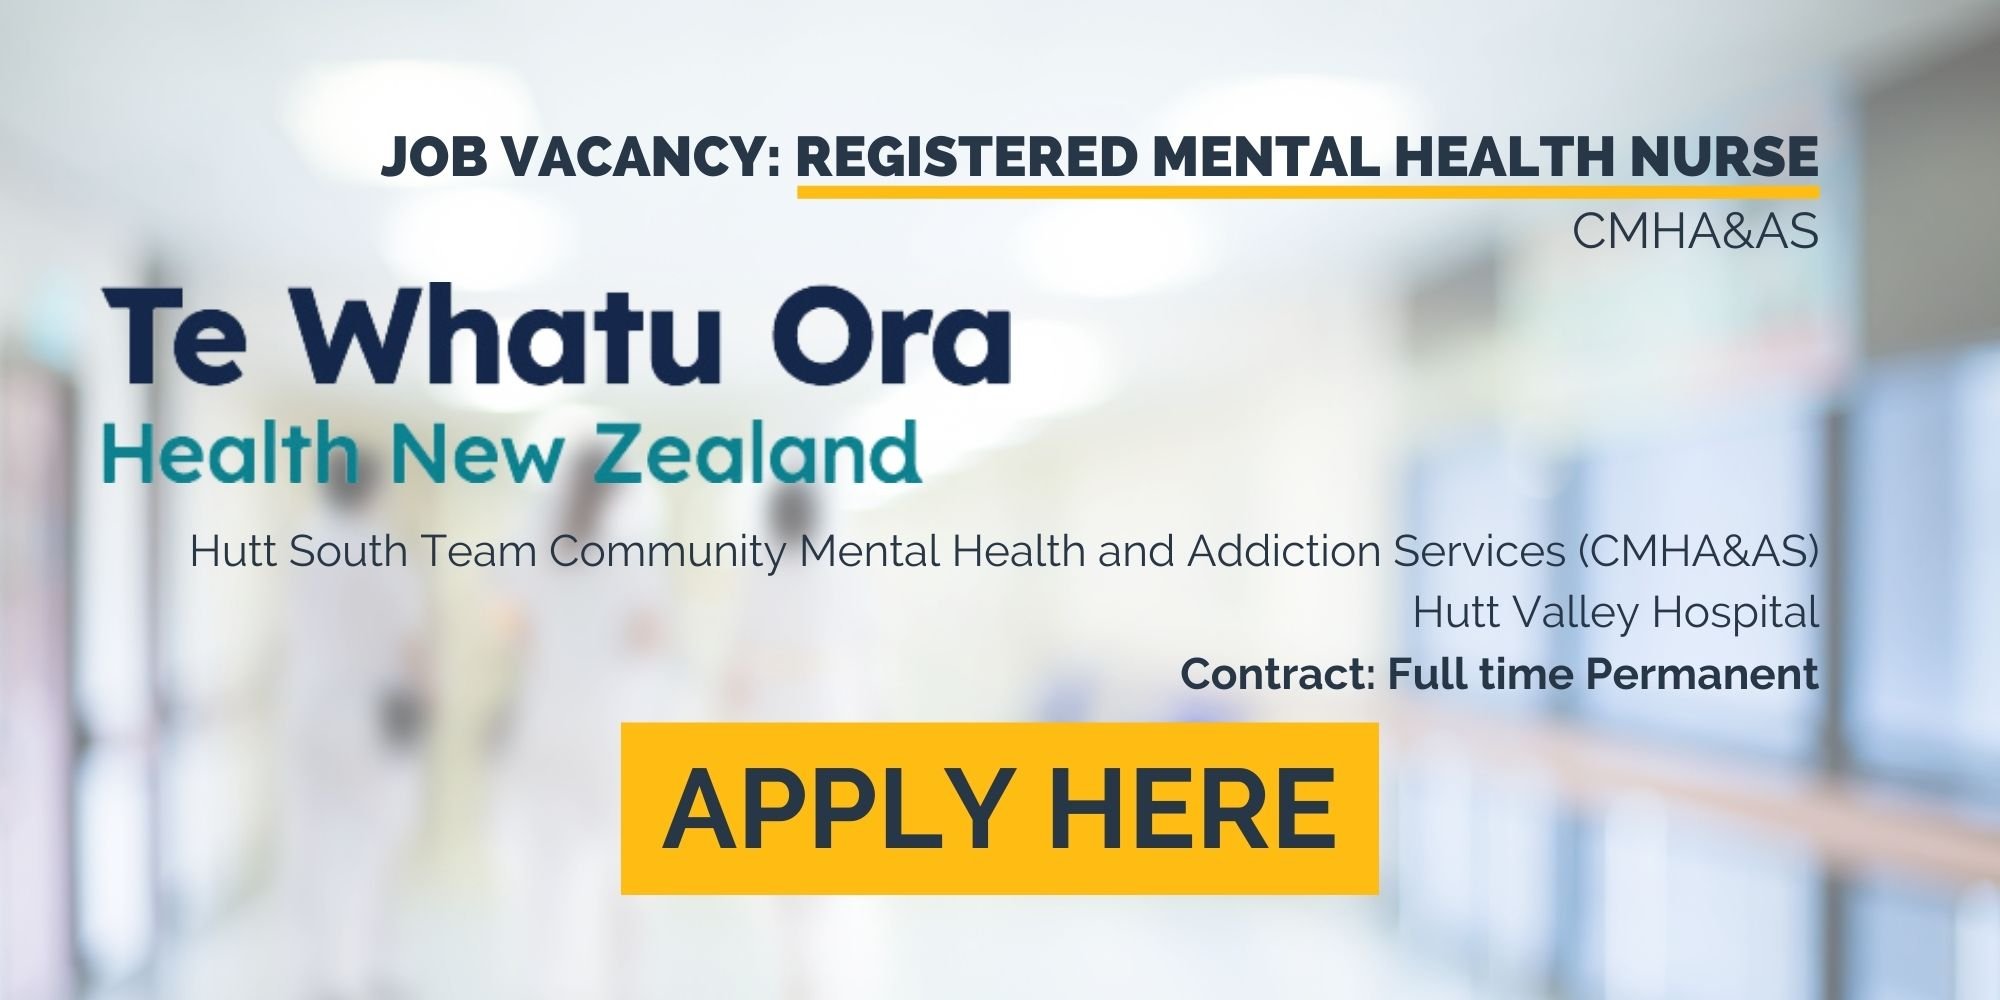 Job Vacancy: Registered Mental Health Nurse